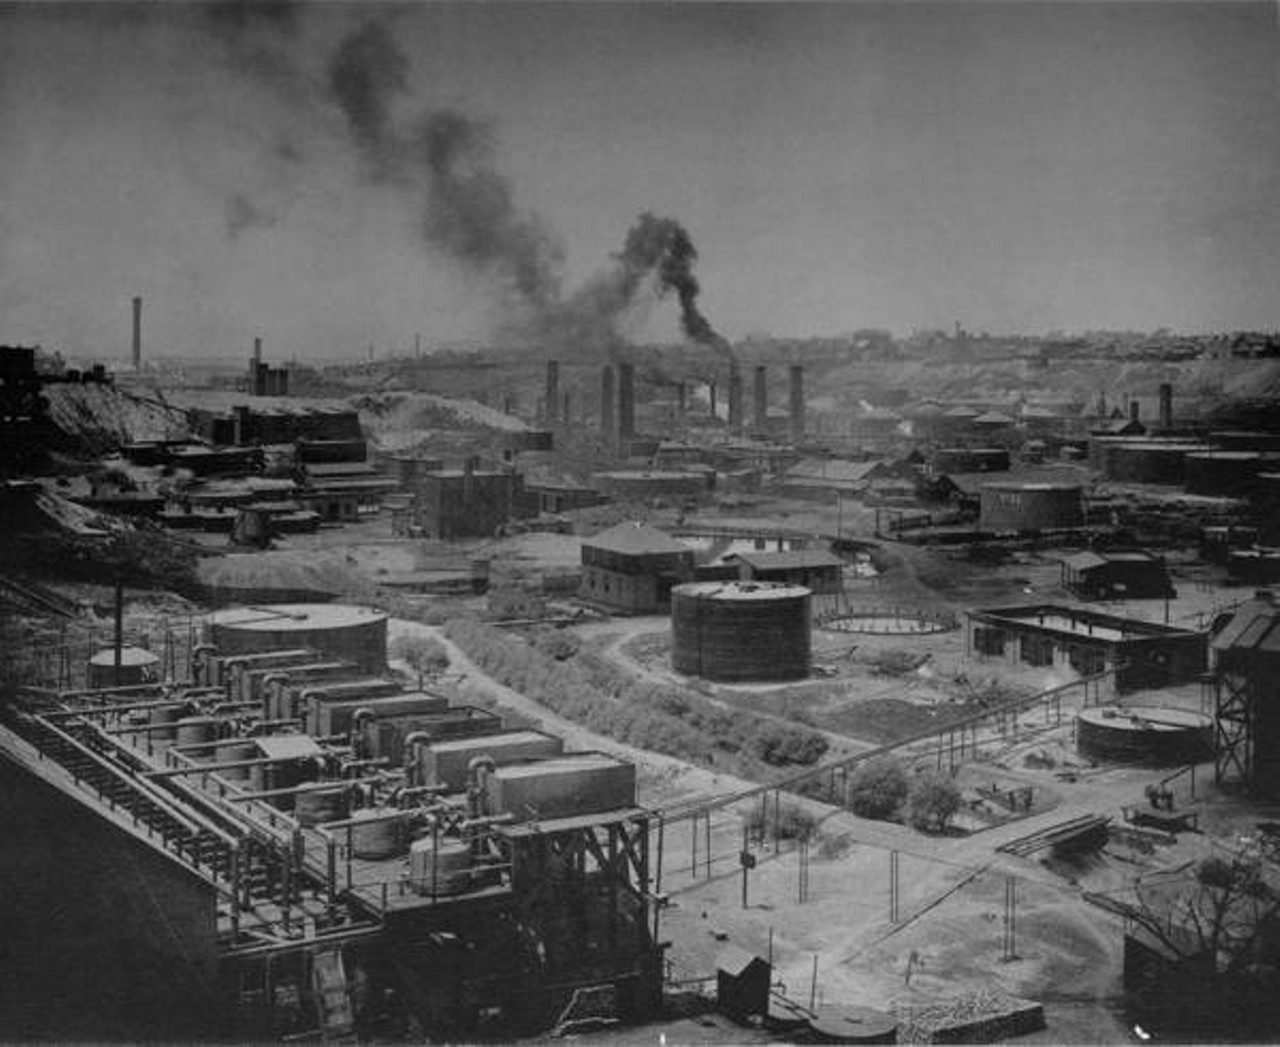 Standard Oil Company's Works